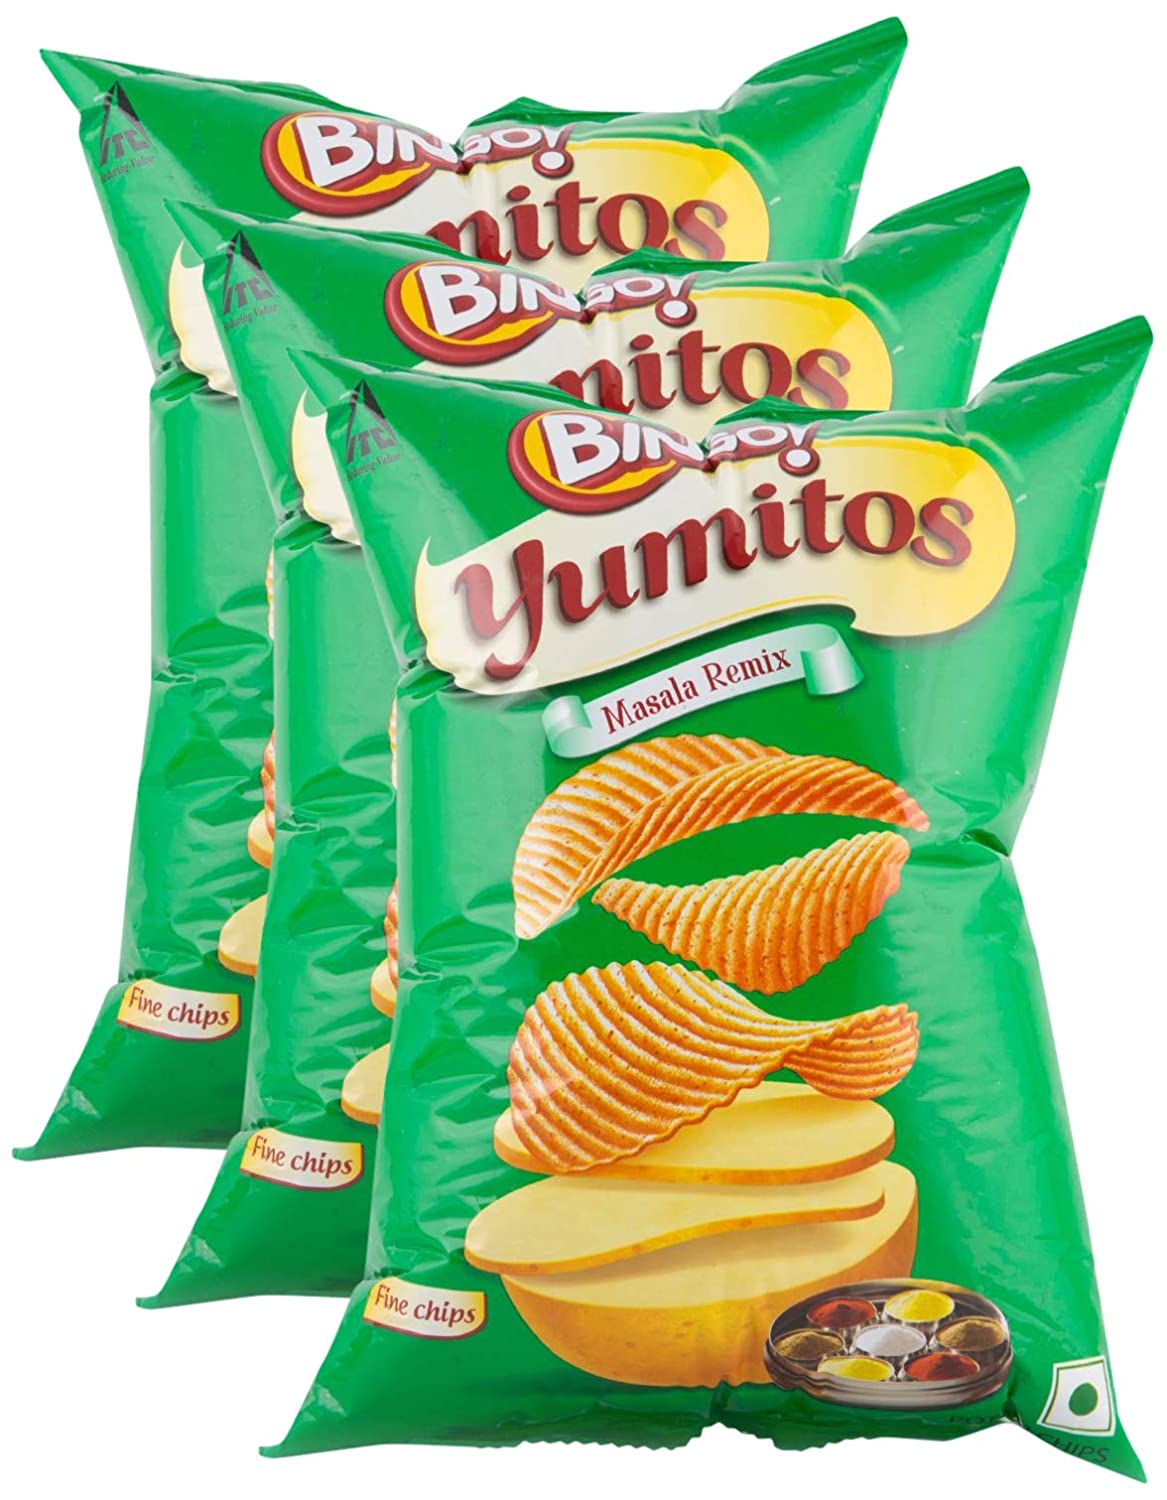 Bingo Yumitos Masala Remix Chips - Pack of 3